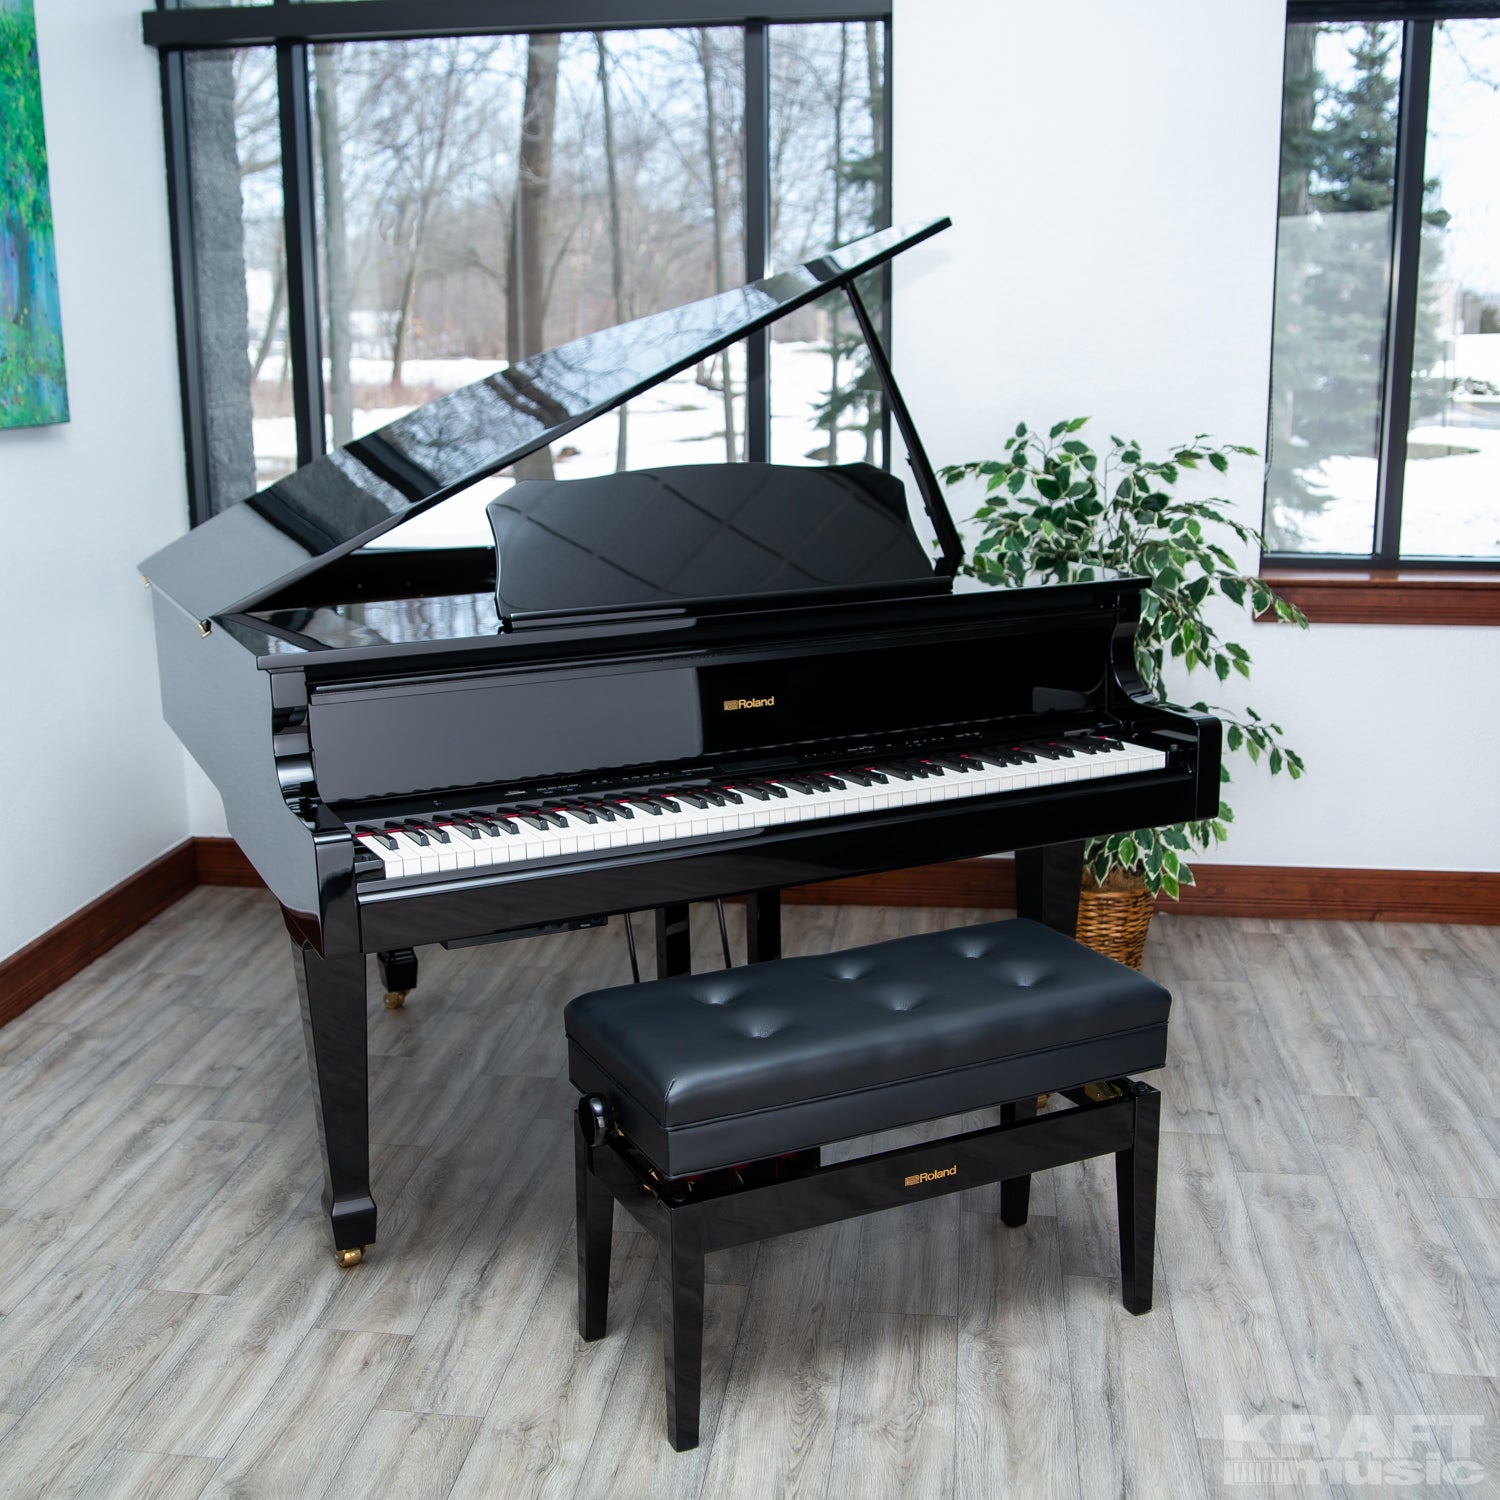 Roland GP609 Digital Grand Piano - Polished Ebony - with a winter scene outside